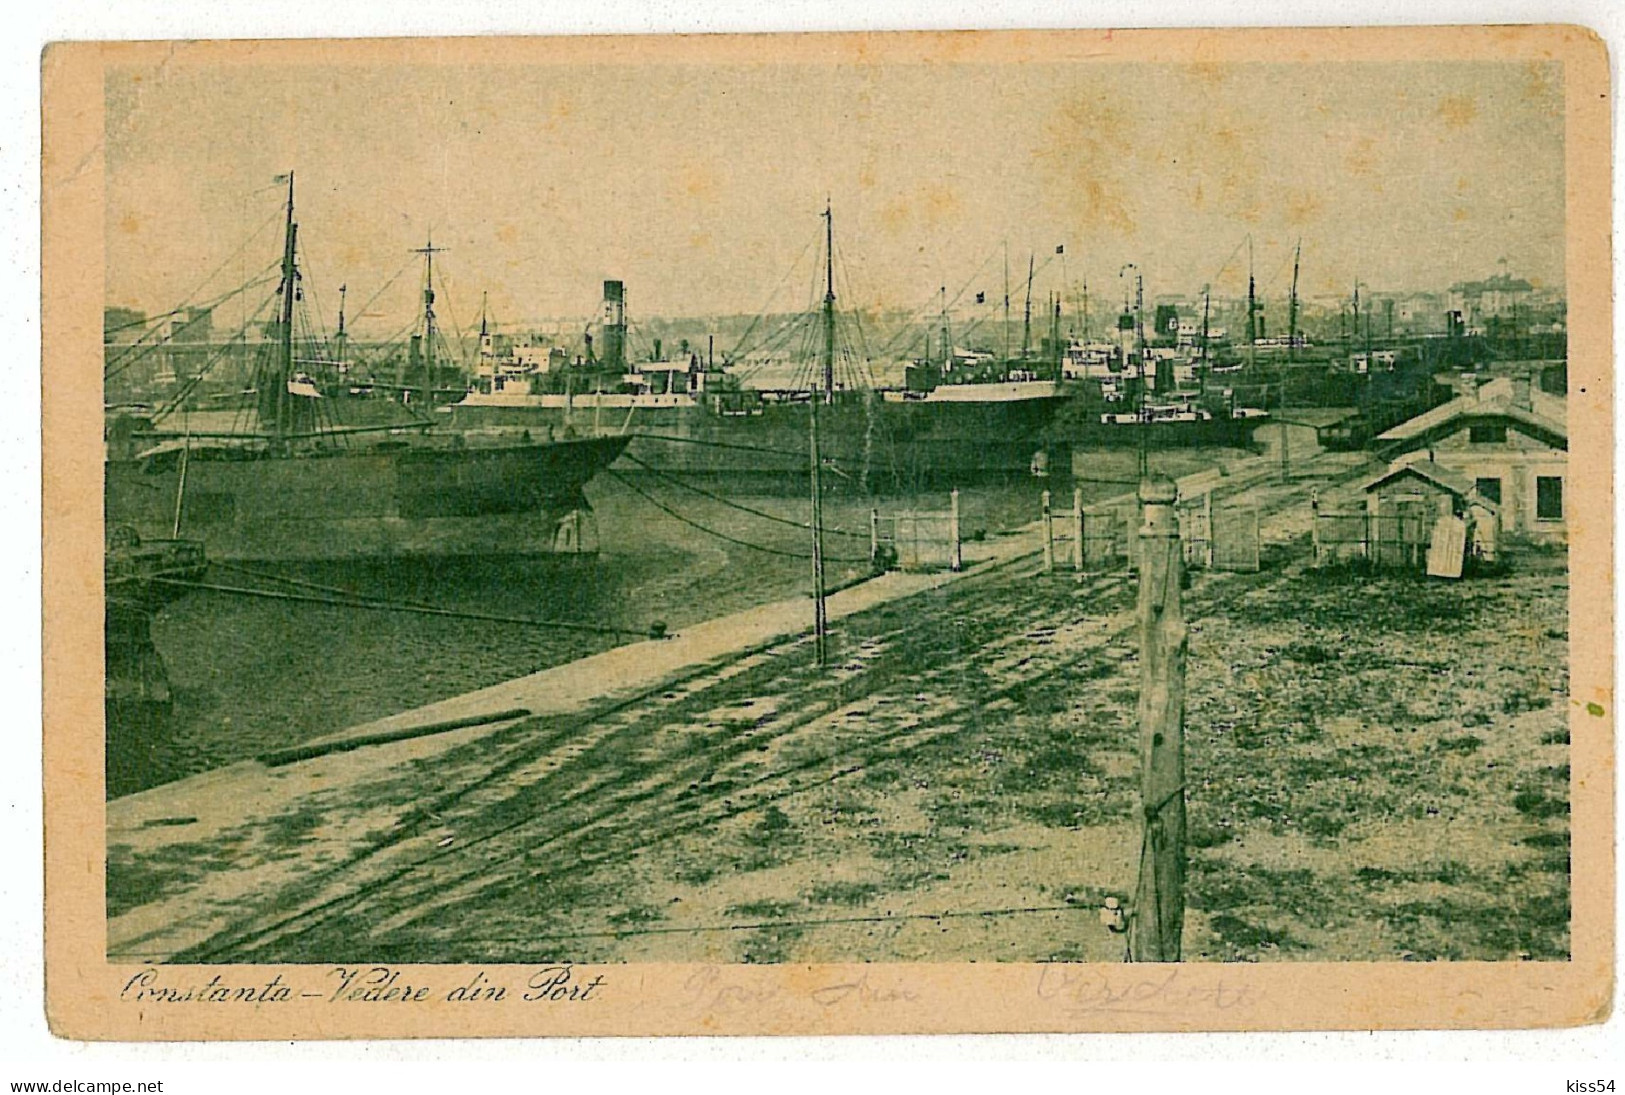 RO 33 - 3325  CONSTANTA, Harbor, Romania - Old Postcard - Used - 1928 - Rumänien